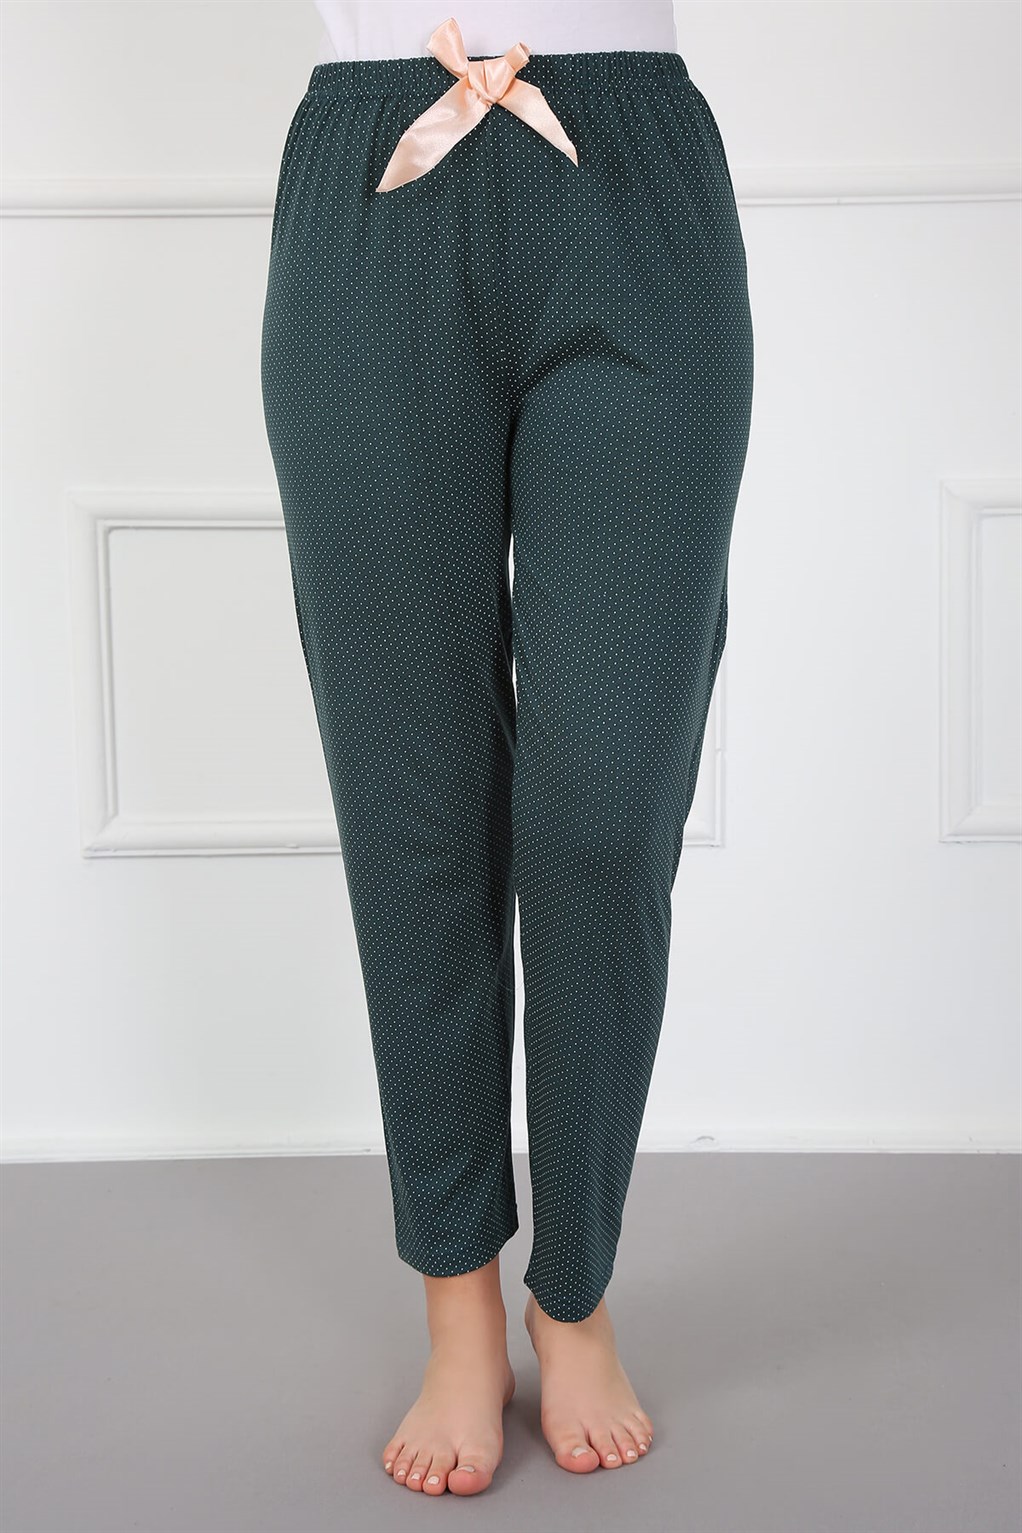 Moda Çizgi Kadın Pamuklu Alt Pijama 210039 - S | Yeşil